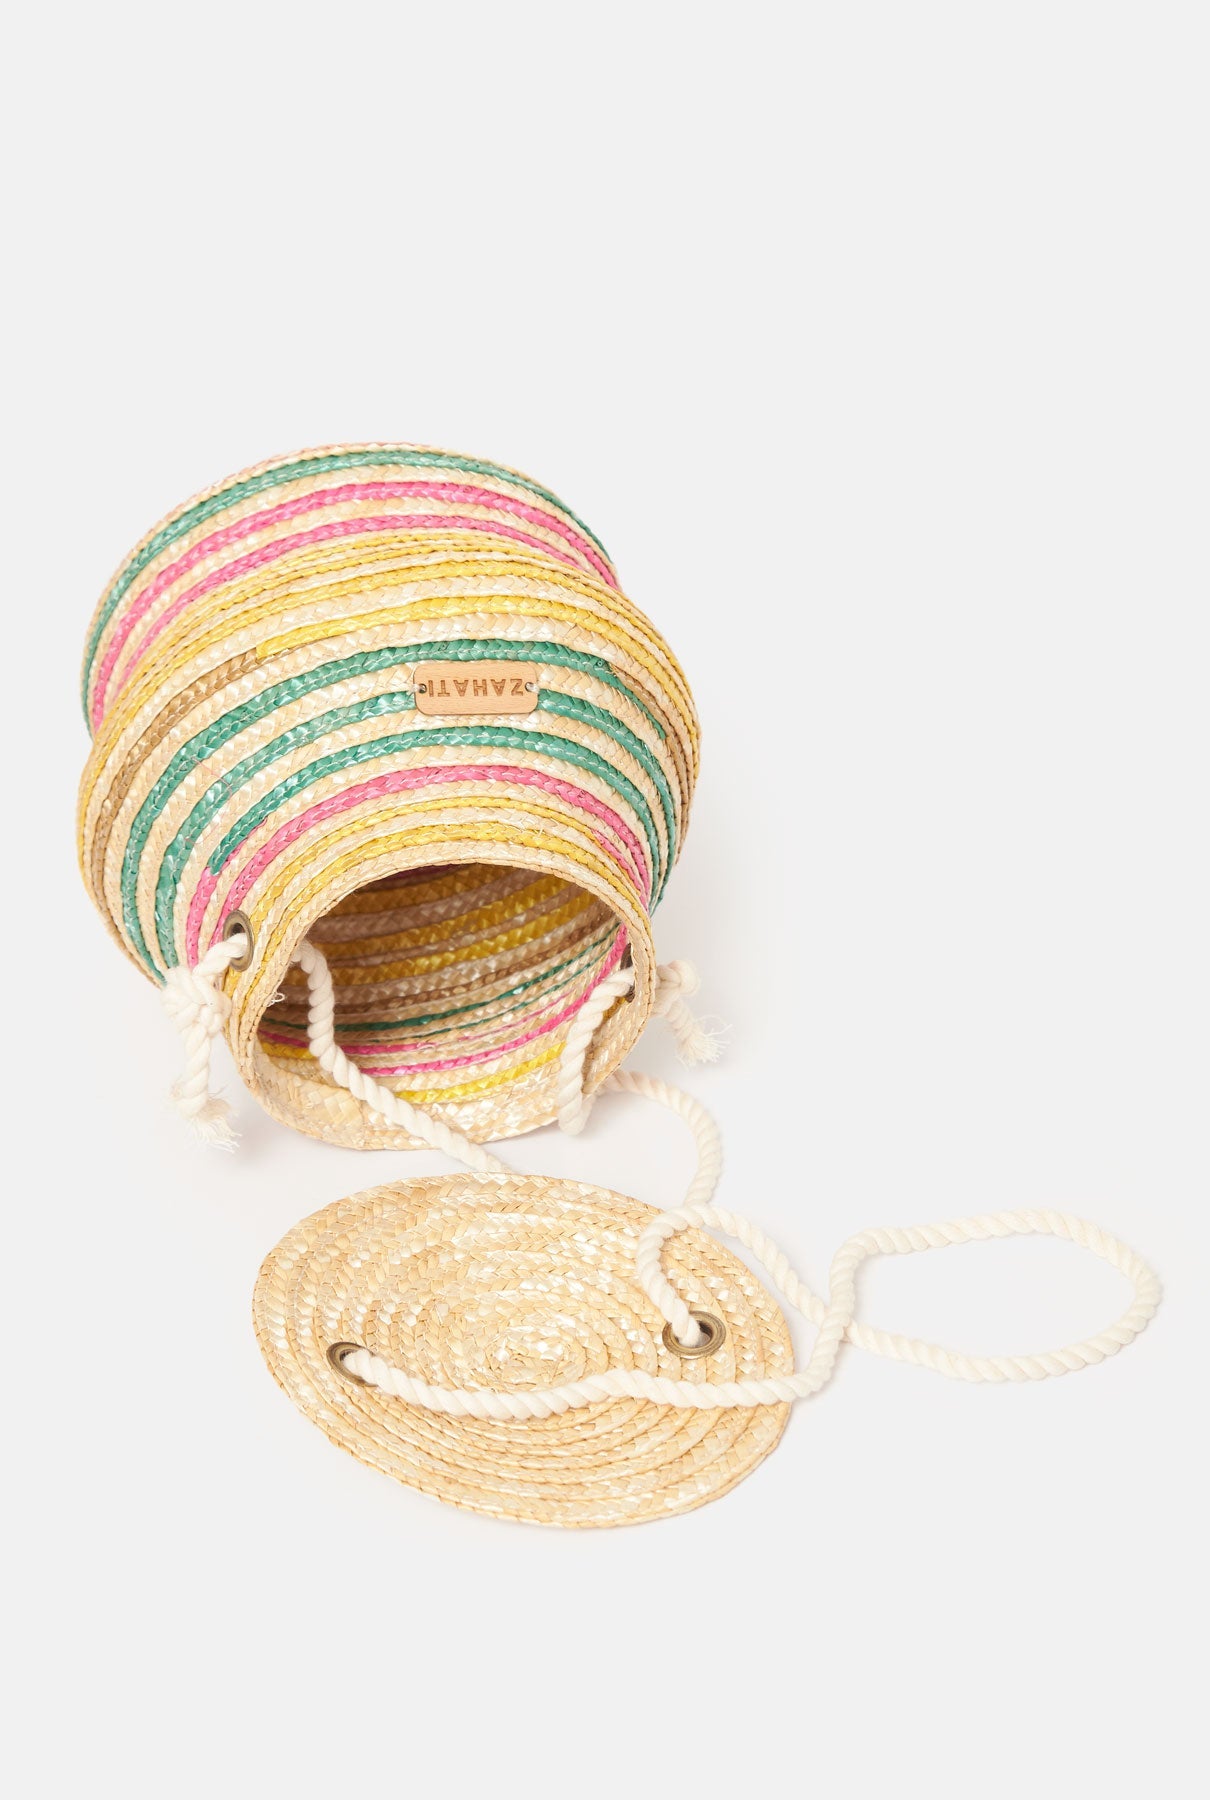 Multicoloured teapot bag Bolsos Zahati 